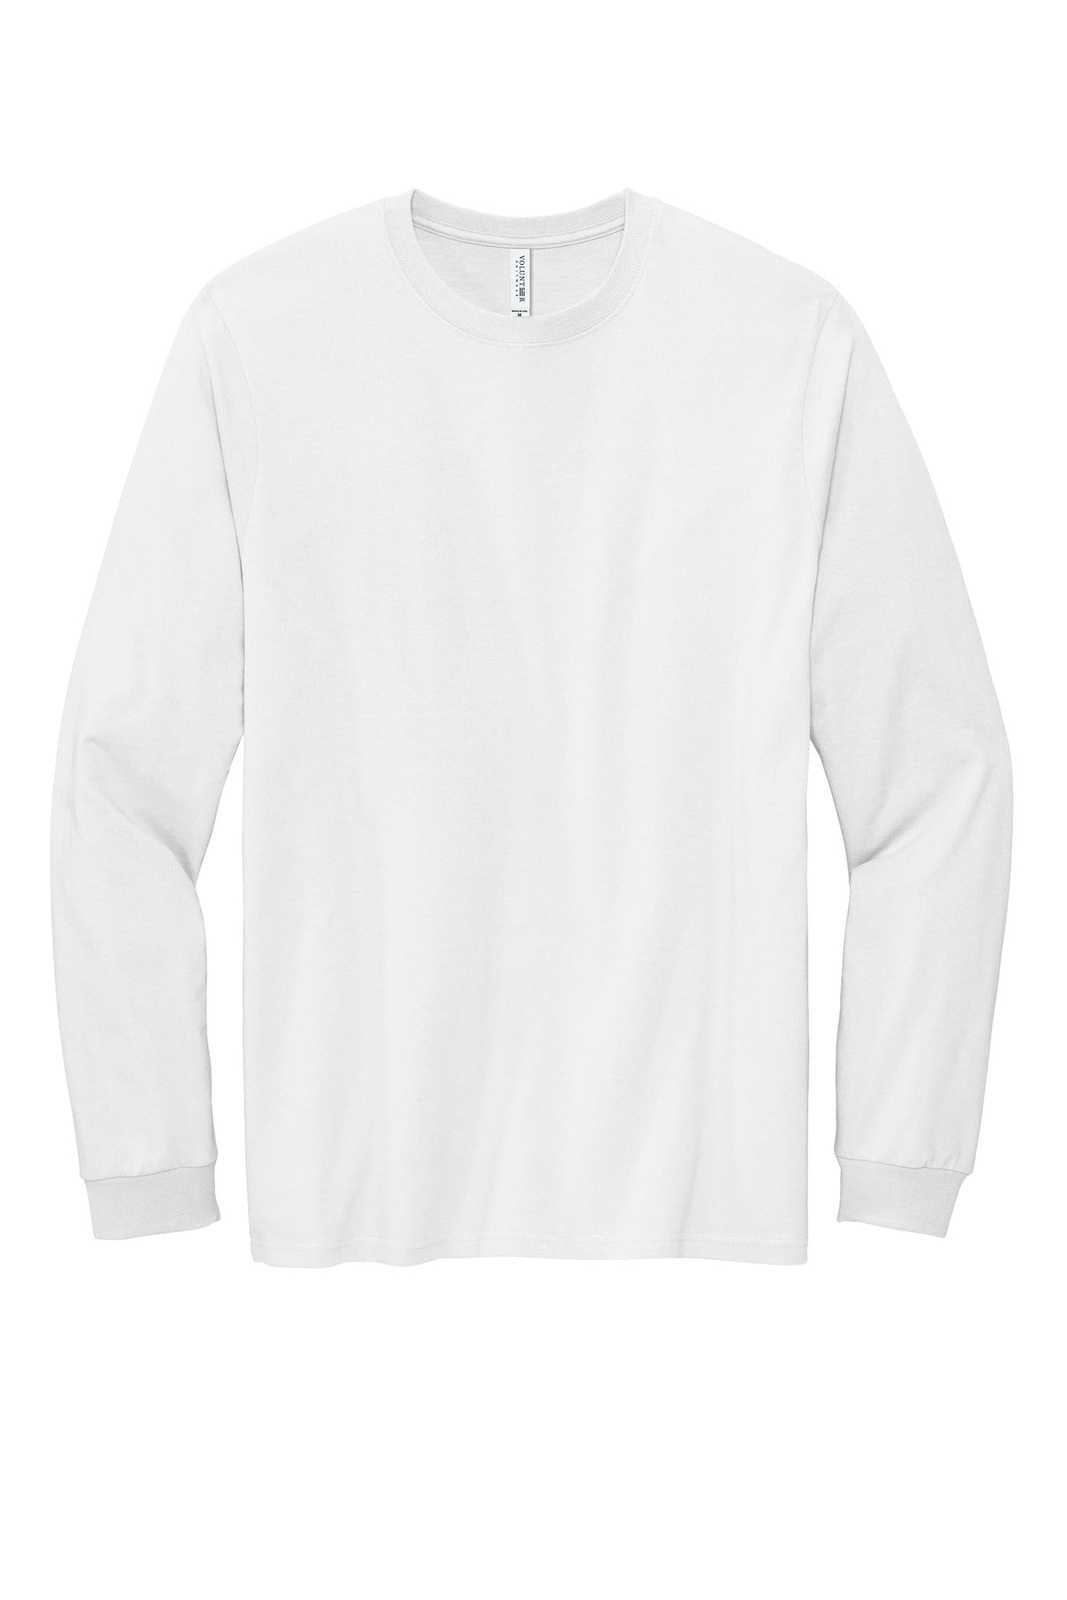 Volunteer Knitwear VL60LS Chore Long Sleeve Tee - White - HIT a Double - 1